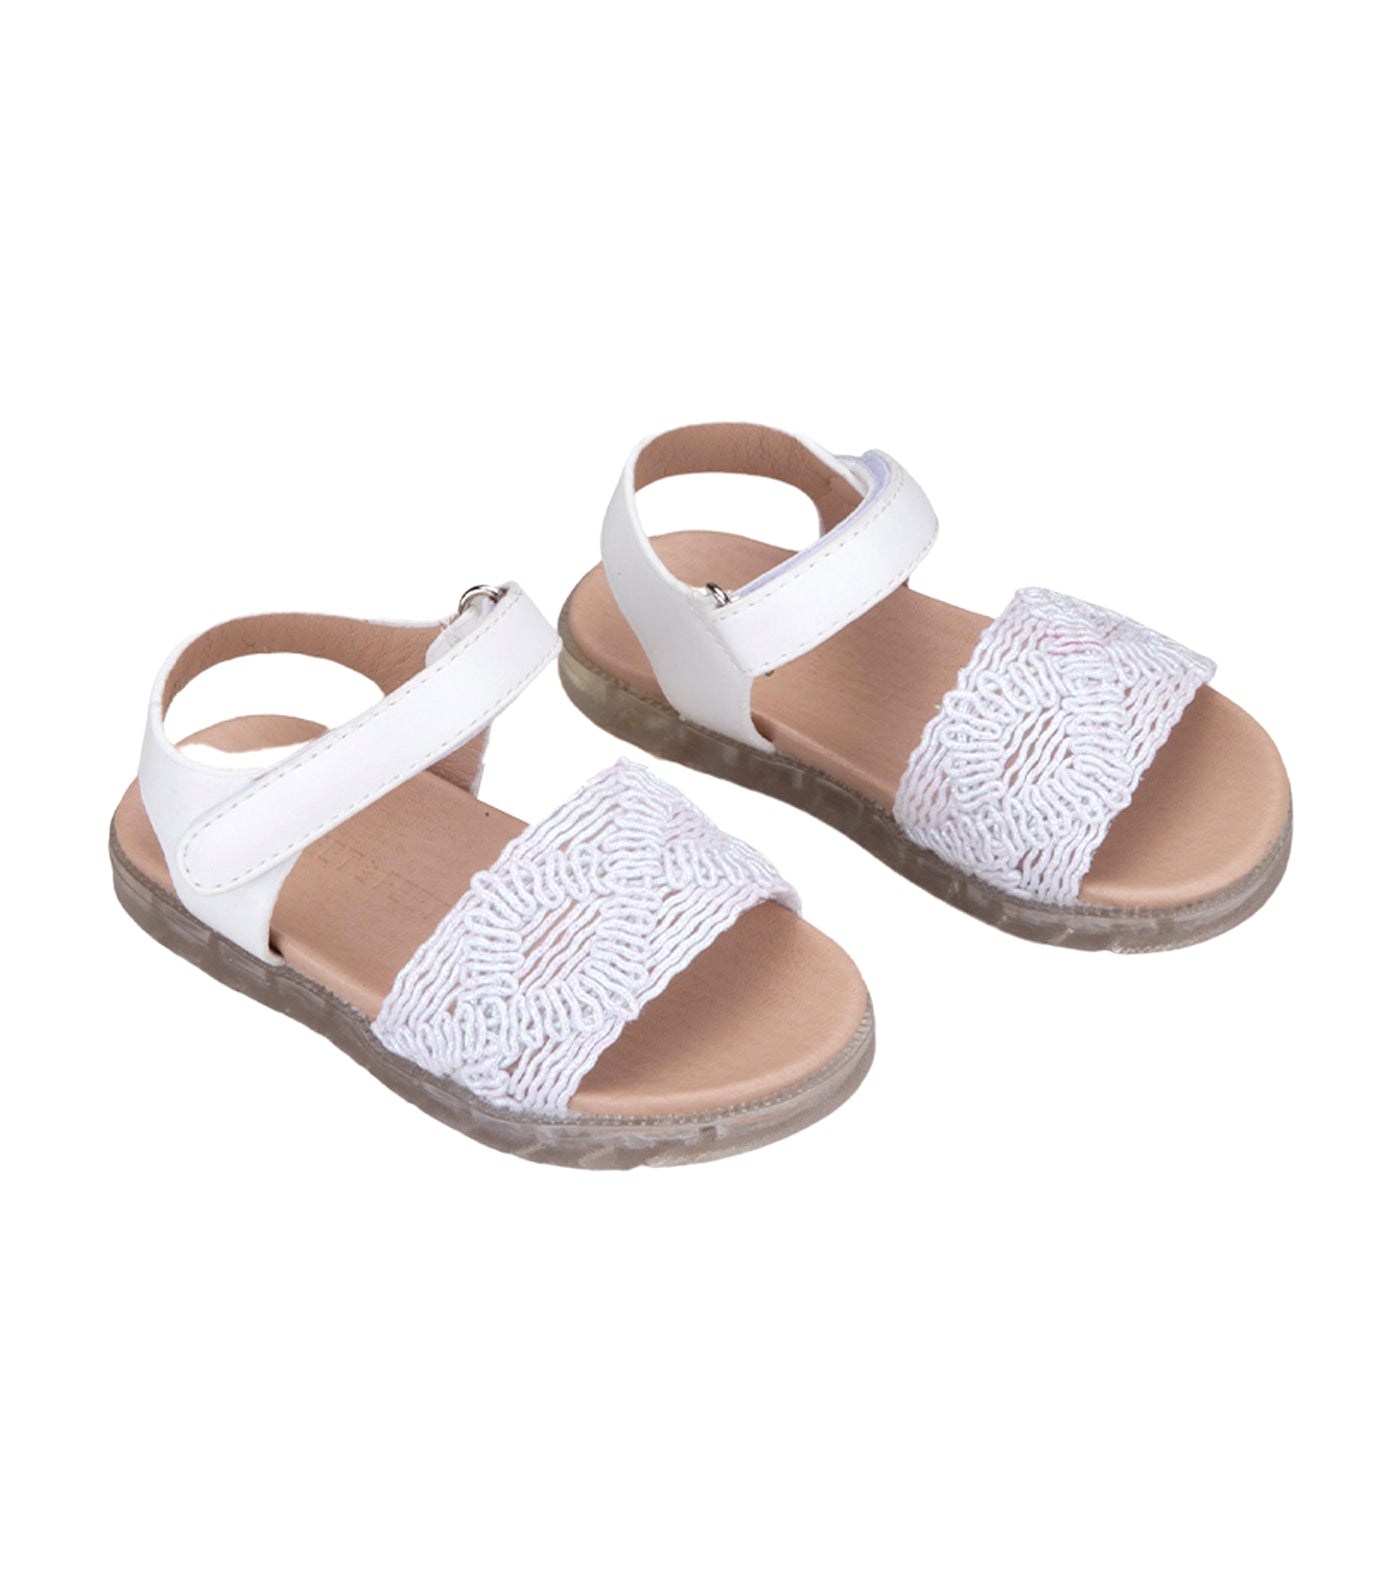 Bina Kids Sandals for Girls - White